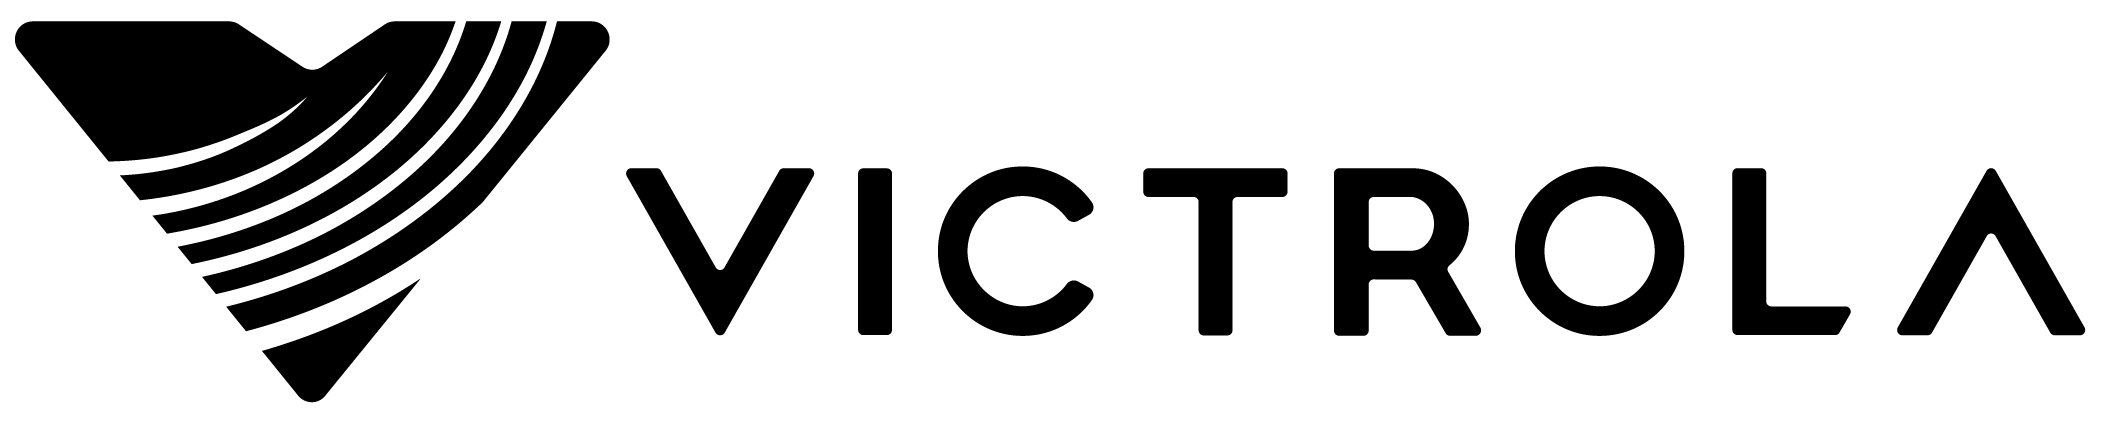 Victrola-Premiere-main-logo-1.png